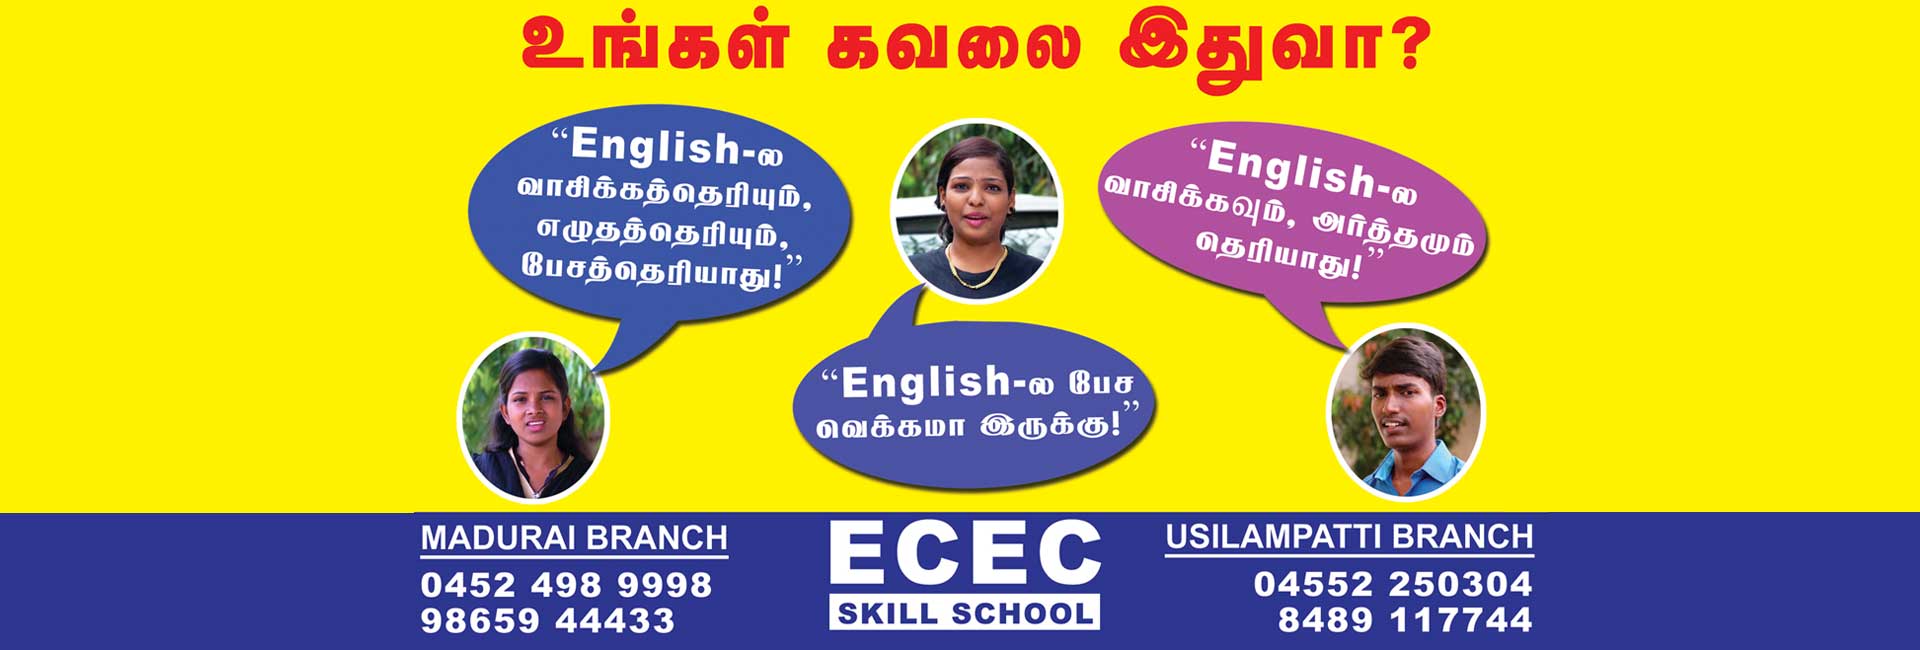 ECEC Skill School